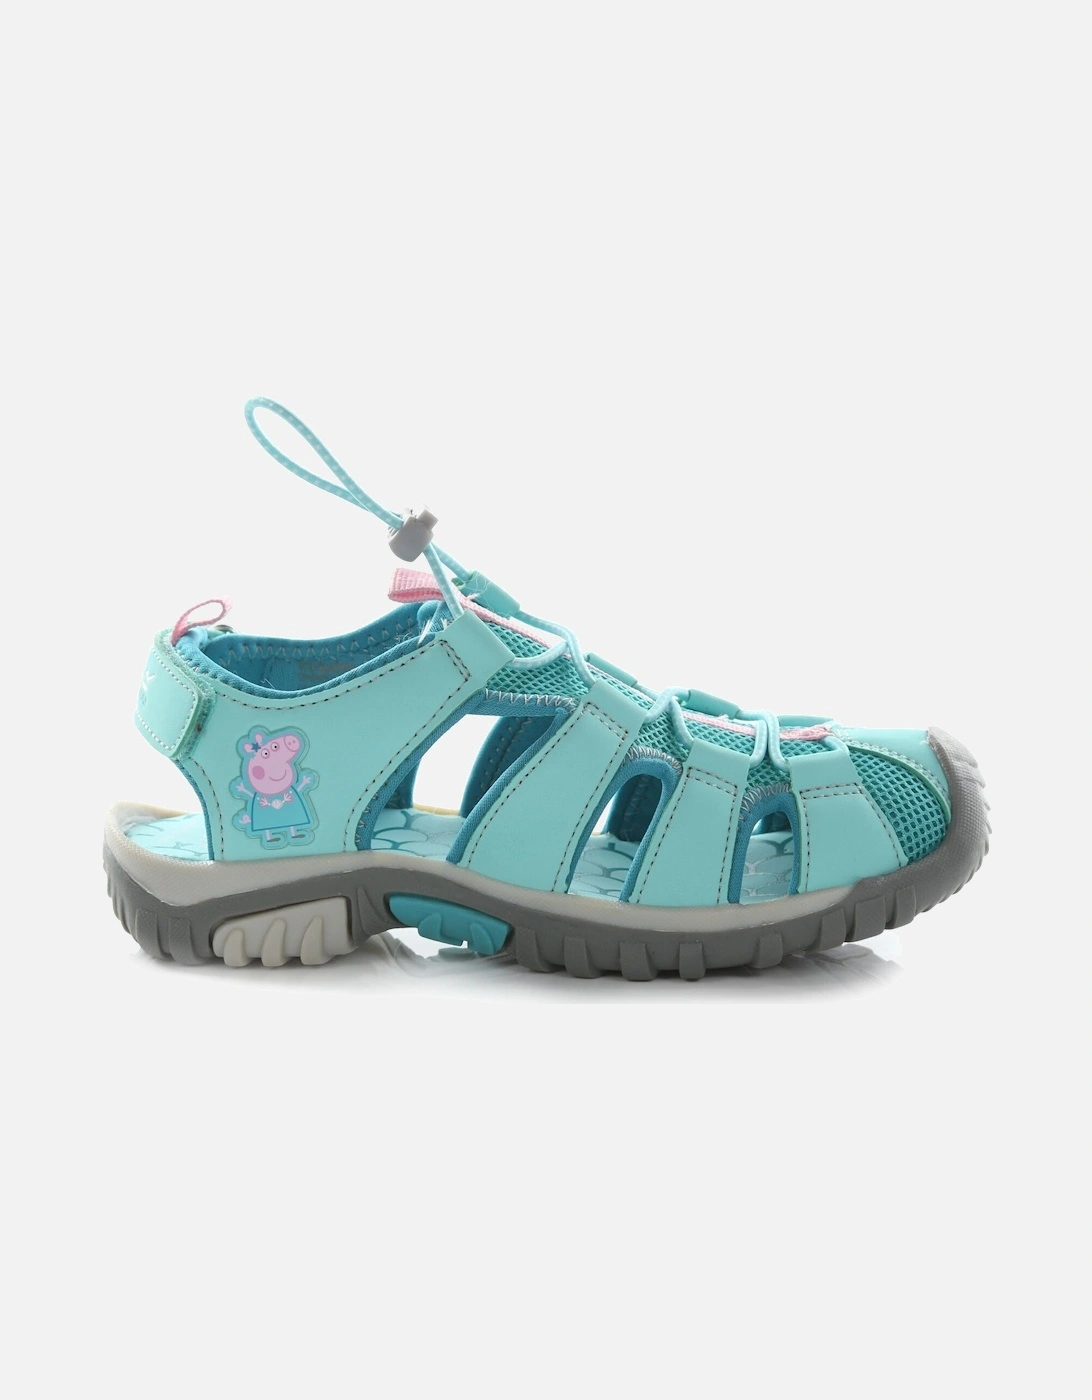 Childrens/Kids Peppa Pig Sandals